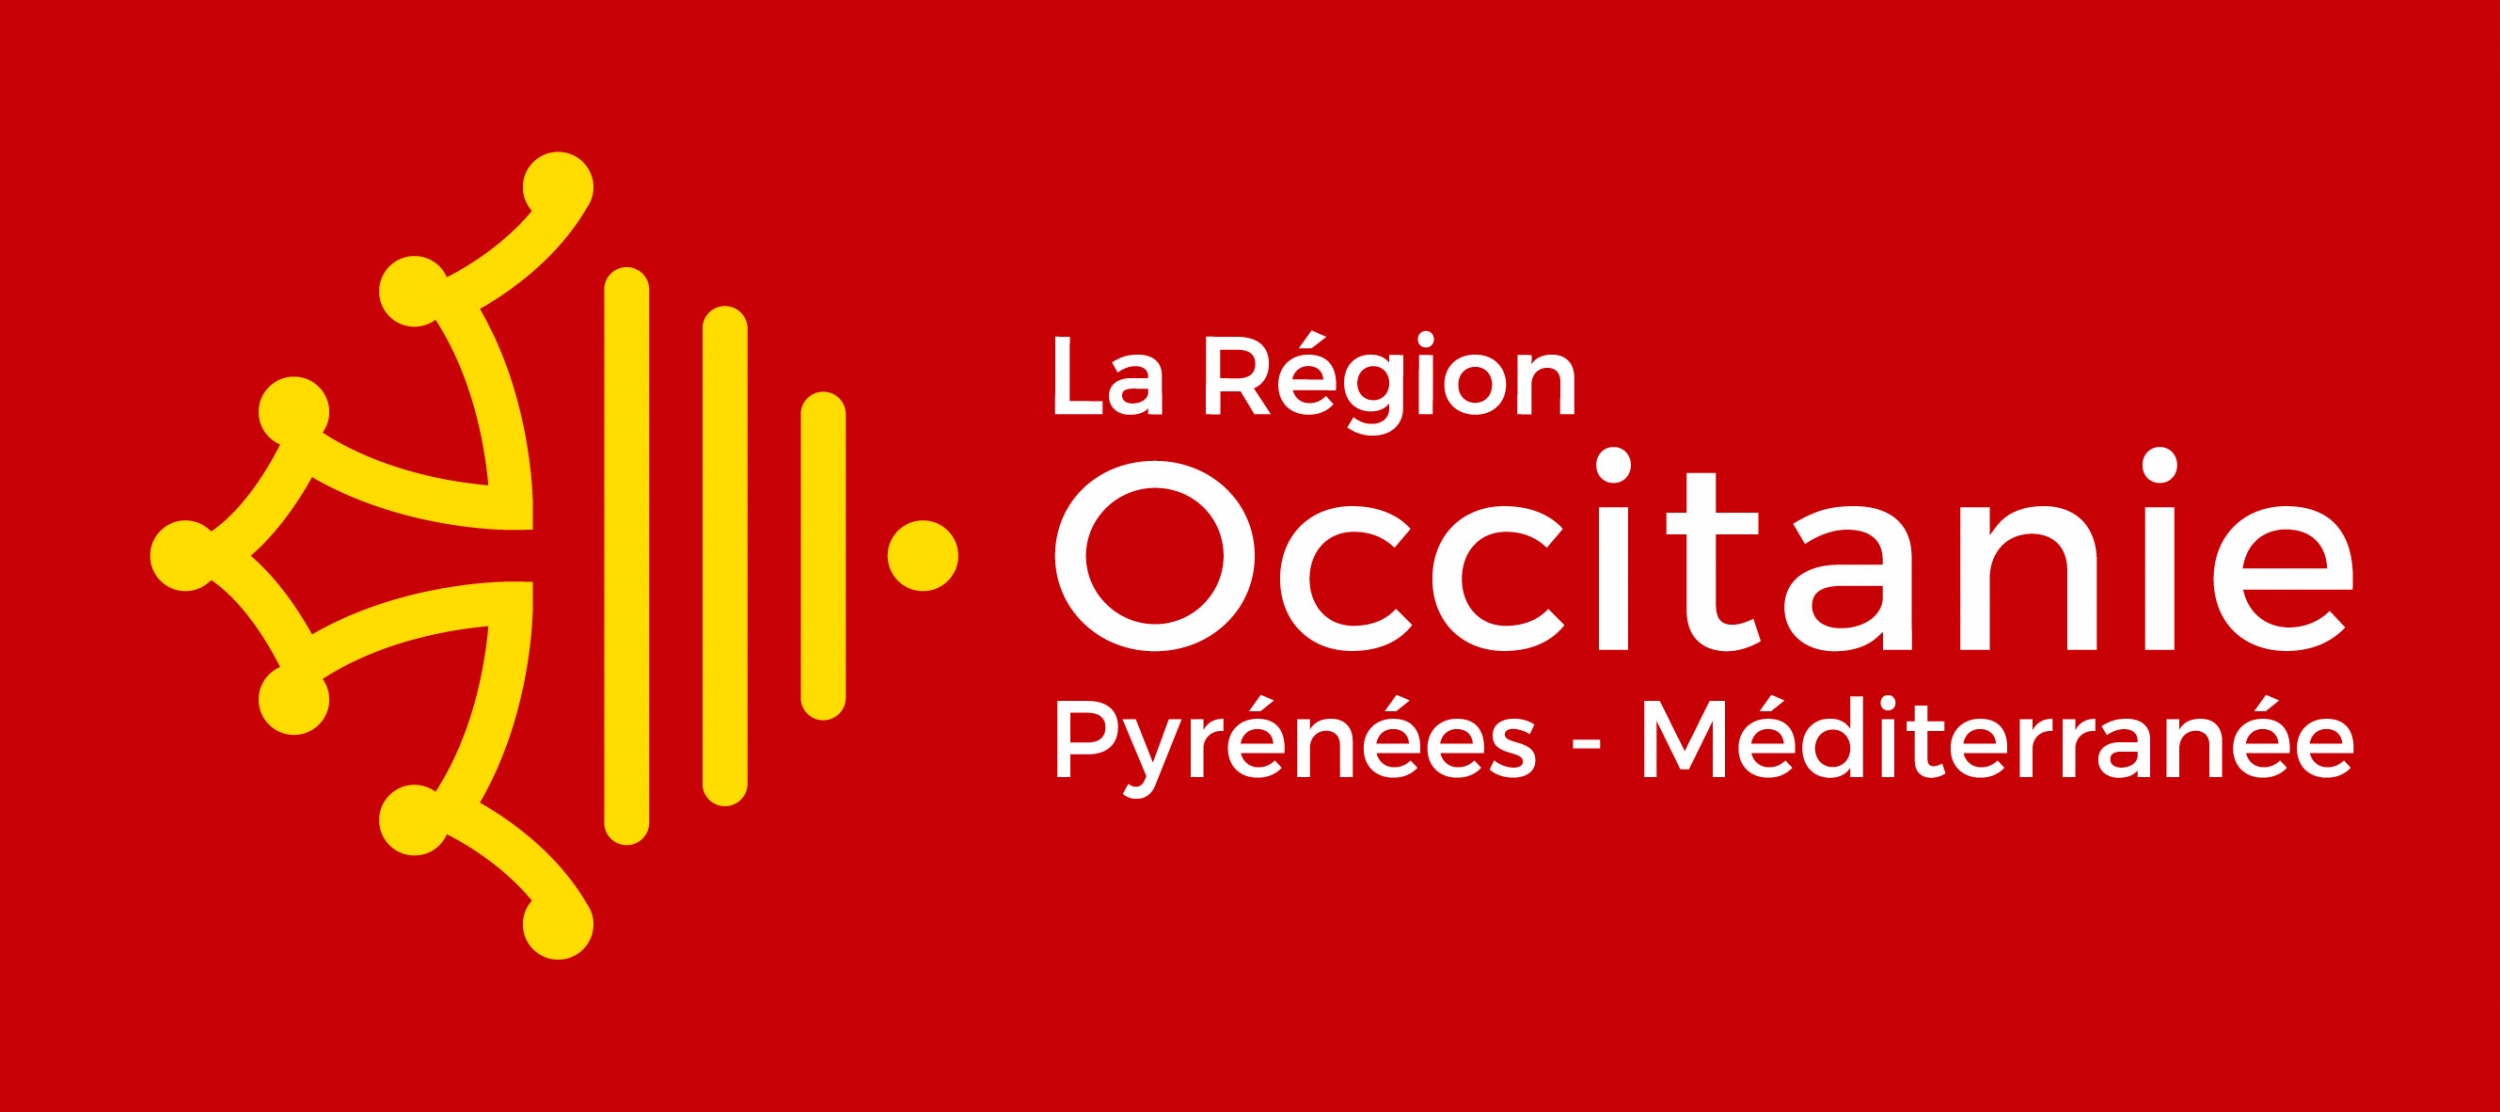 Le Région Occitanie